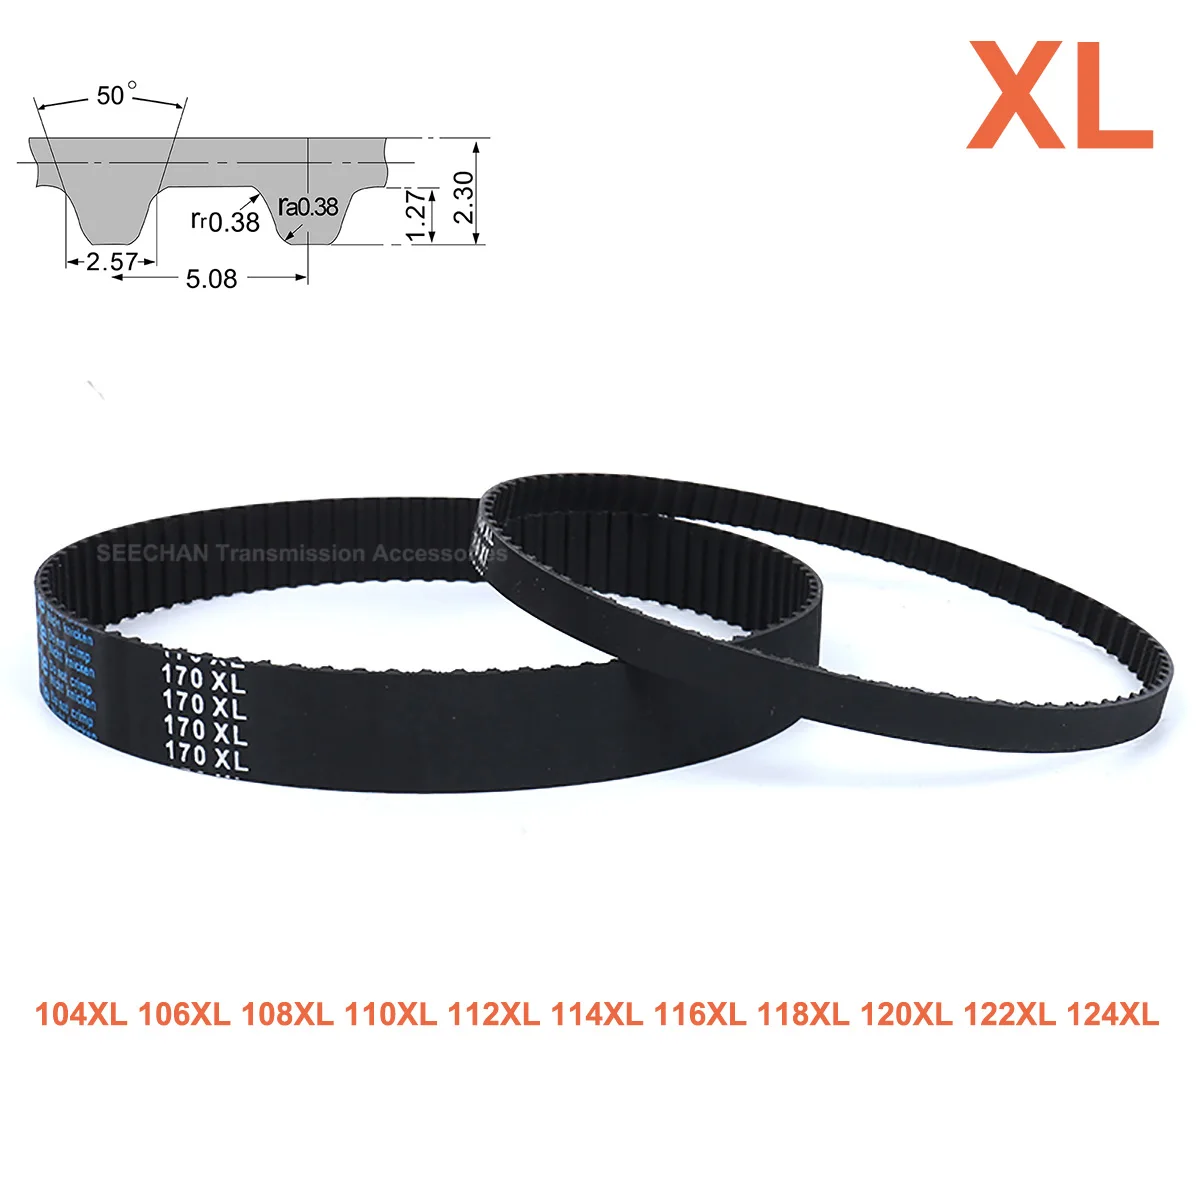 

XL Rubber Timing Belt Width 10/12.7mm Closed Synchronous Belt 104XL 106XL 108XL 110XL 112XL 114XL 116XL 118XL 120XL 122XL 124XL